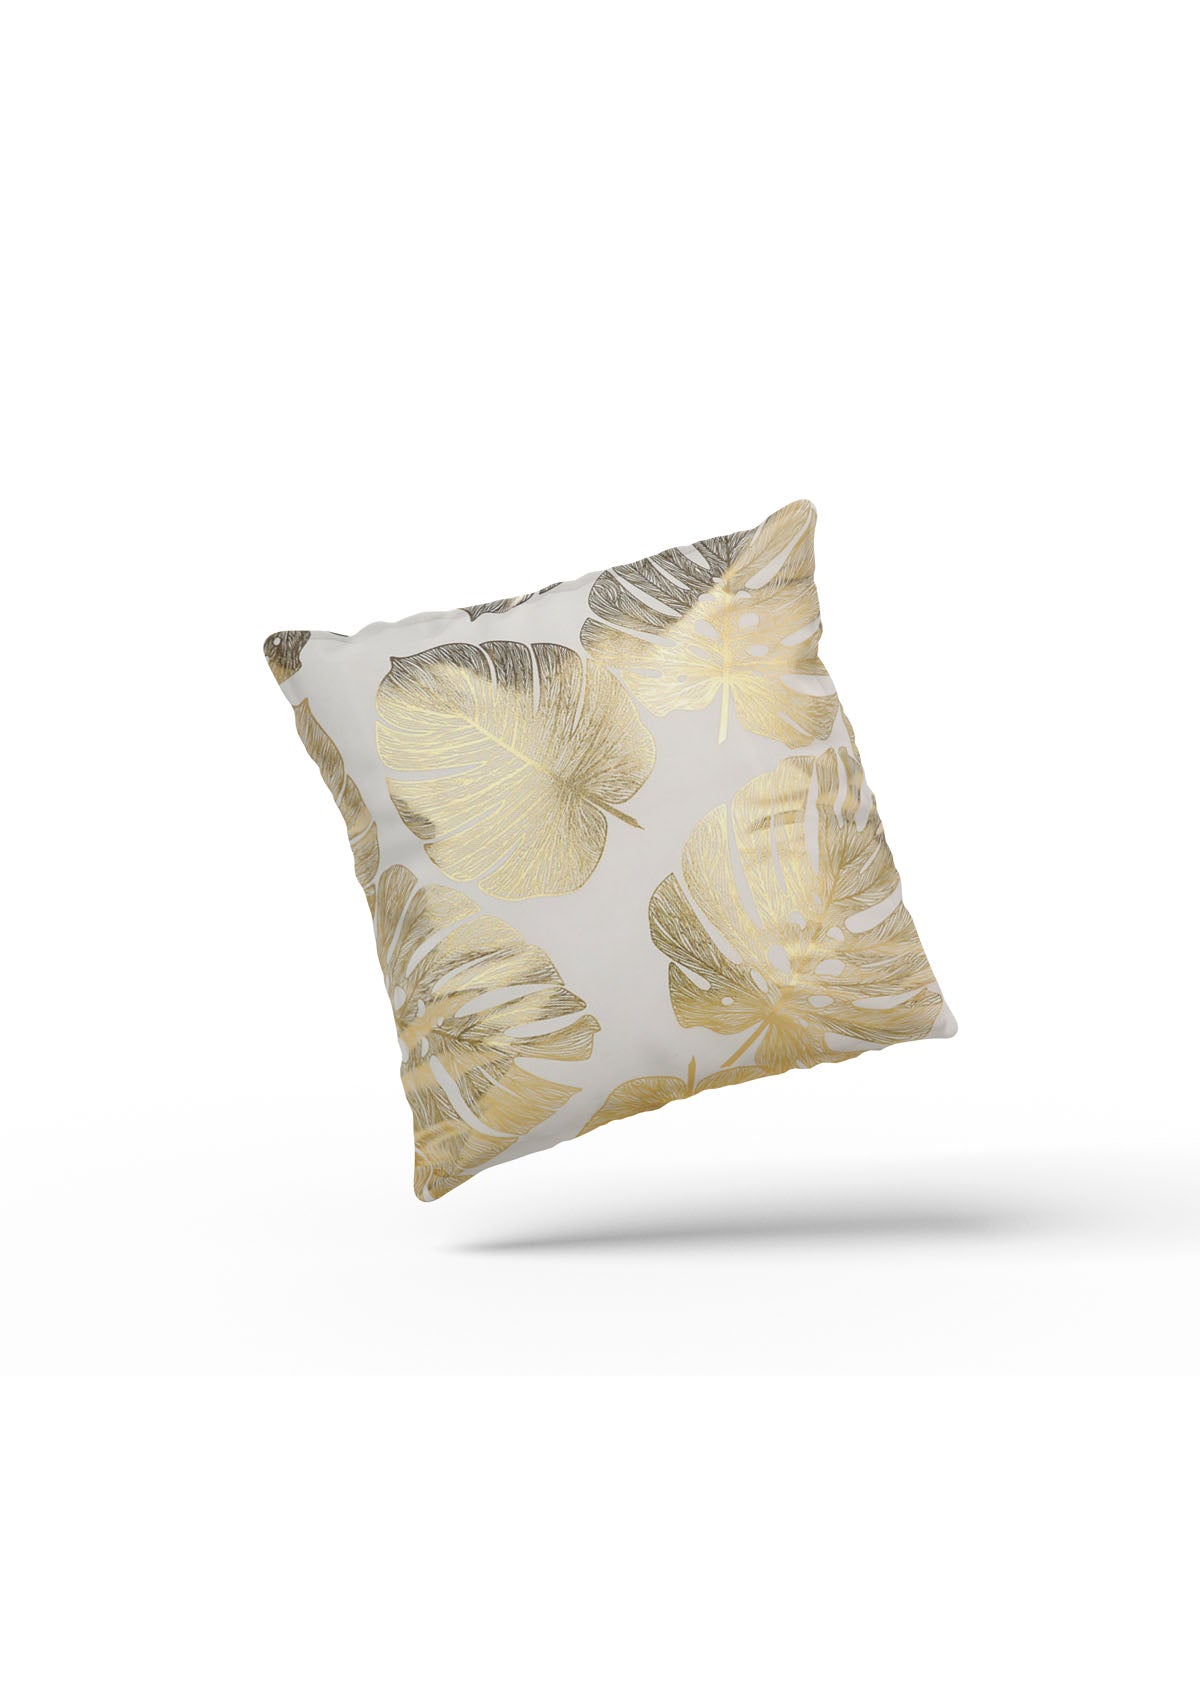 Elegant gold leaf cushion cover with captivating design